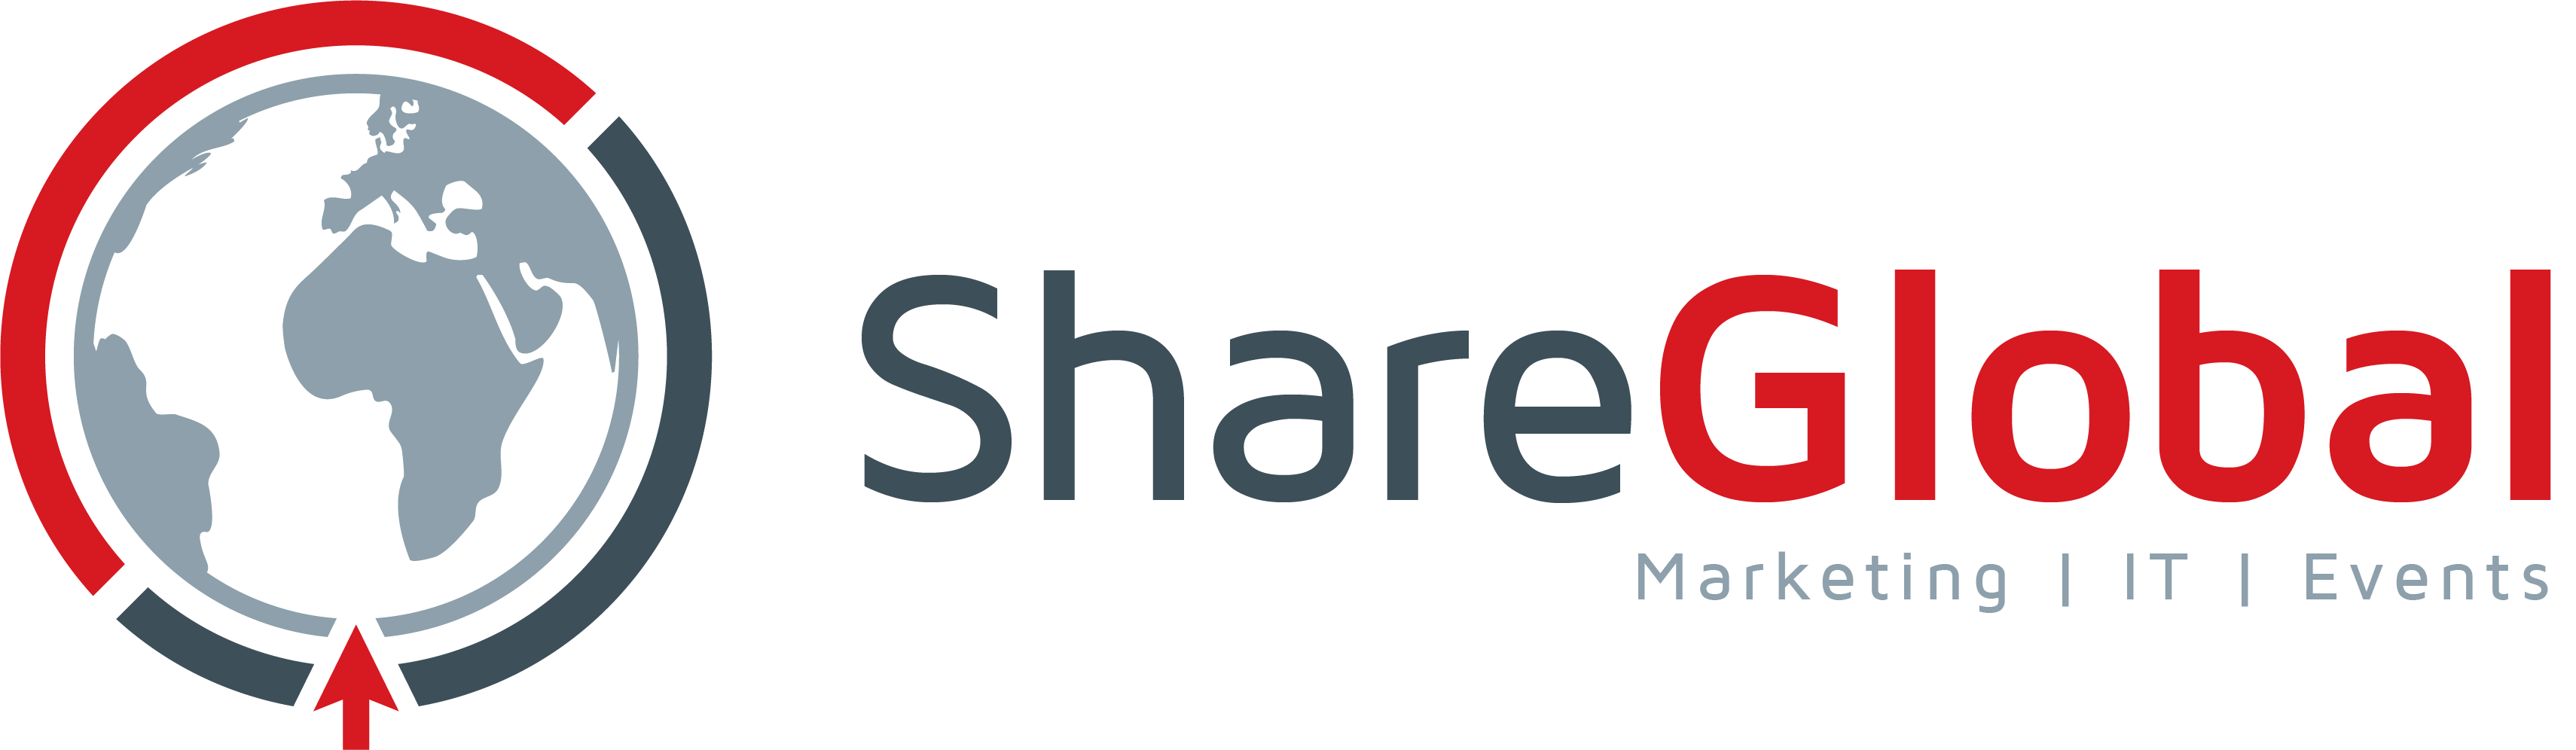 Share Global